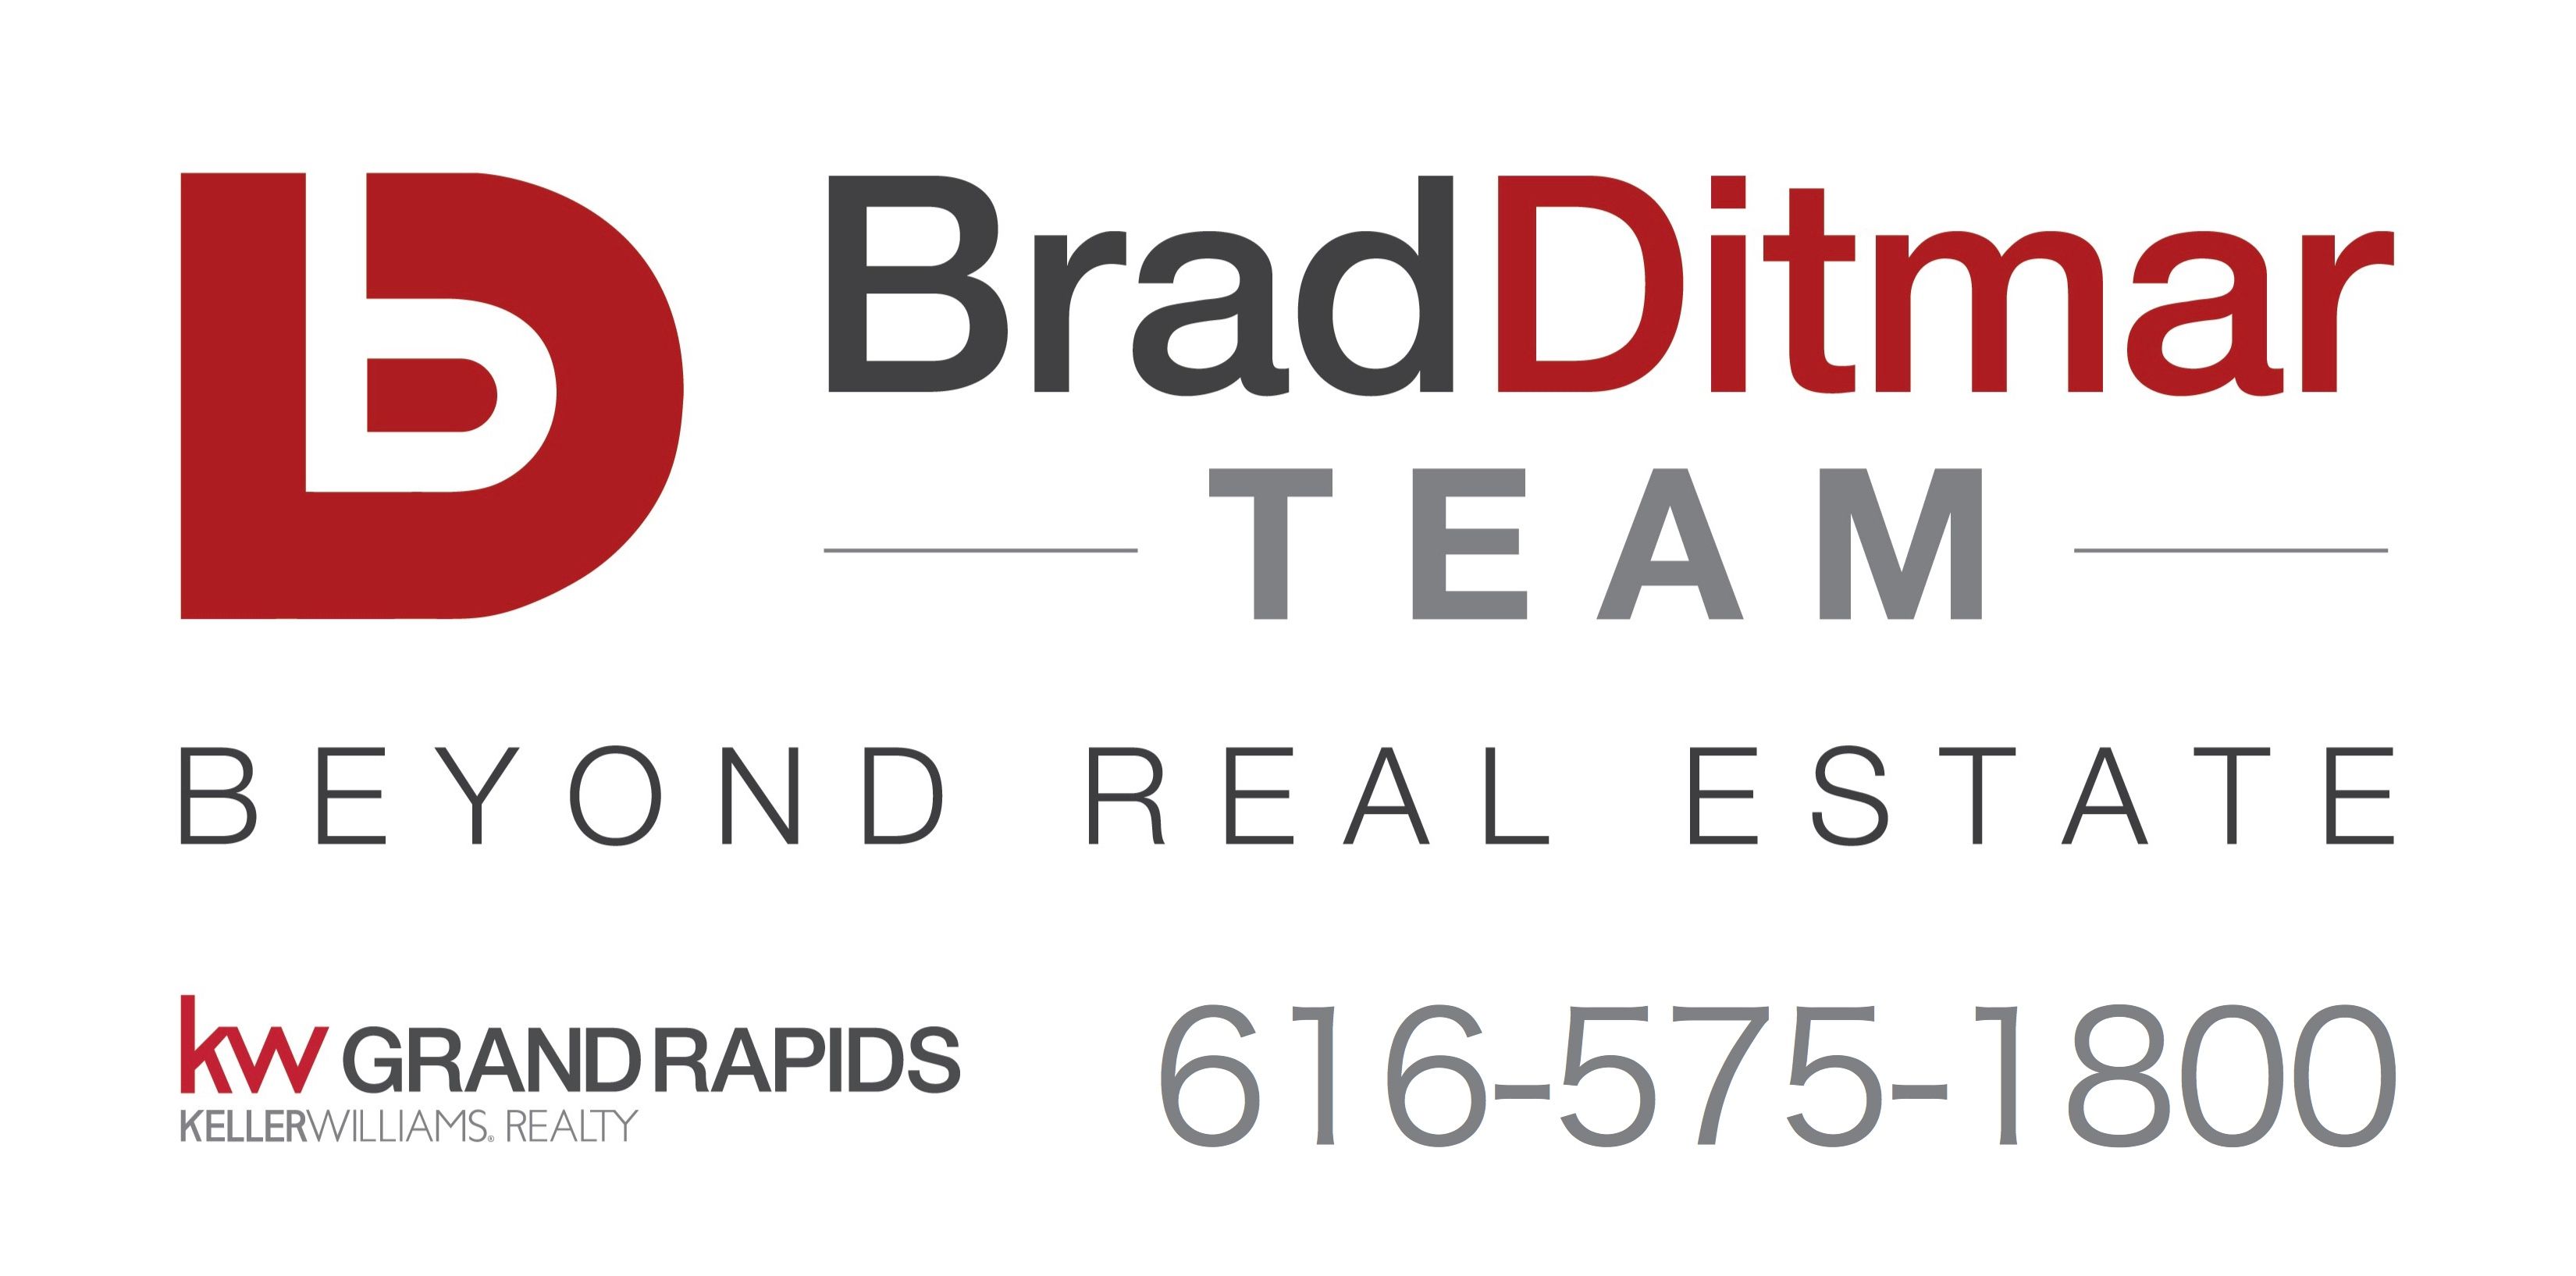 The Brad Ditmar Team